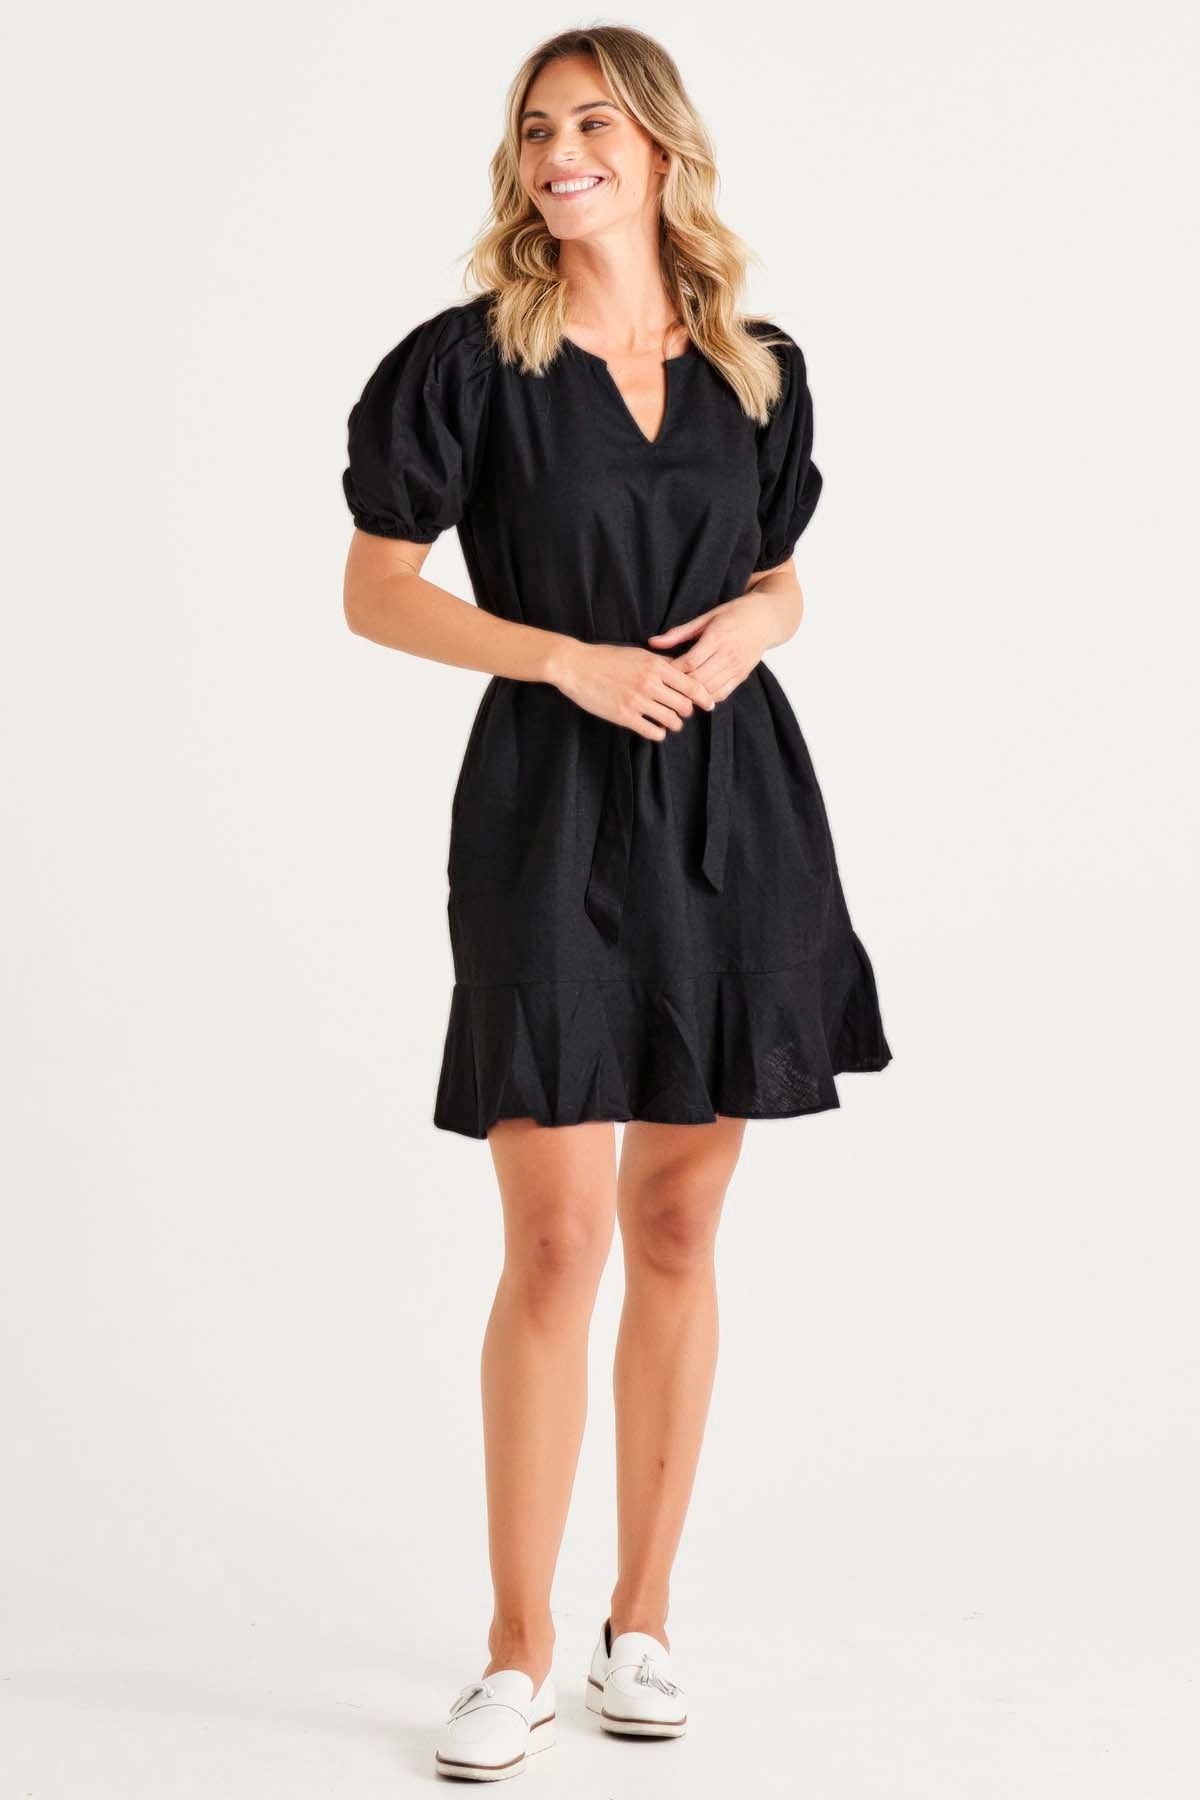 Betty Basics Birdie Mini Dress in Coal Black